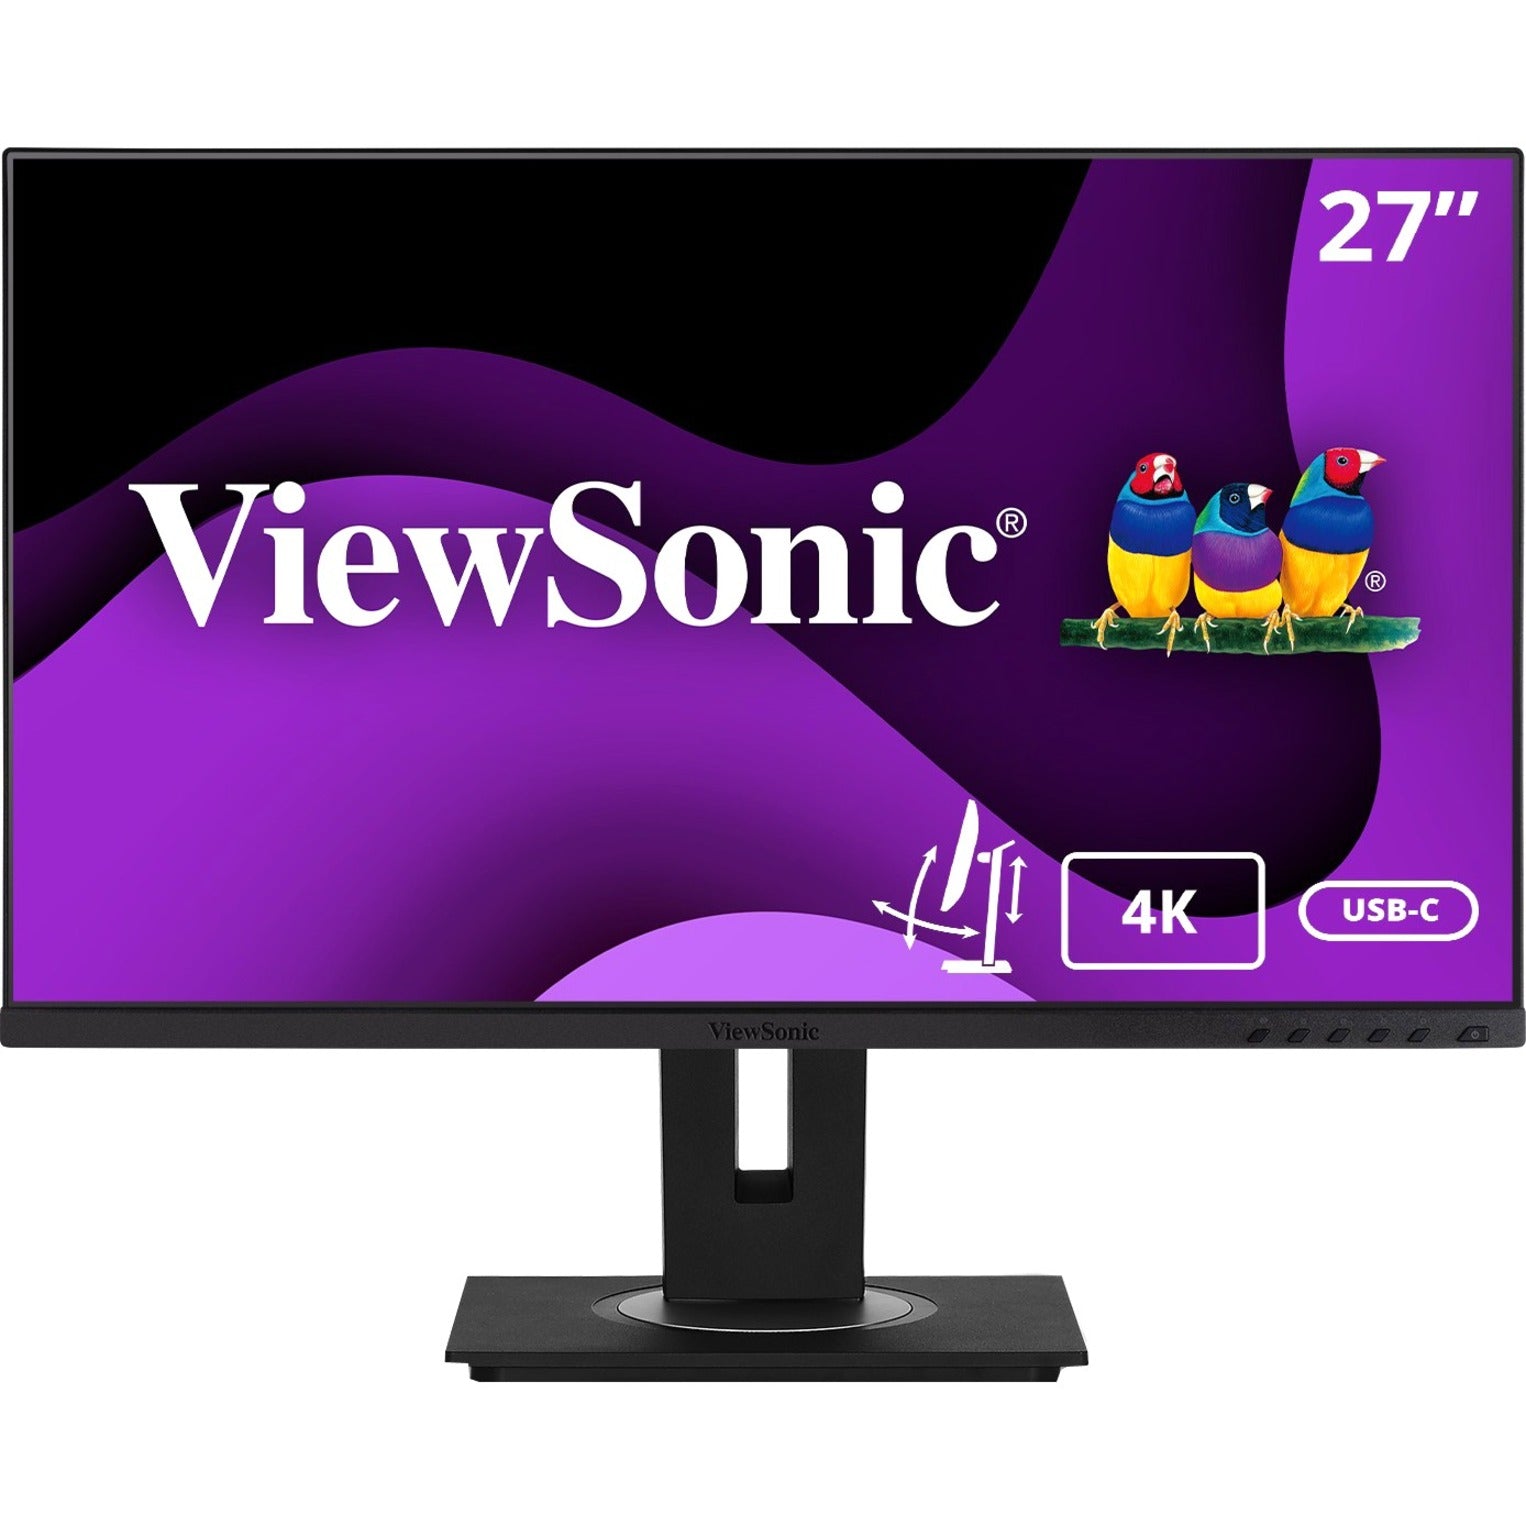 ViewSonic VG2756-4K 27" 4K Ultra HD Docking Monitor, USB-C, Built-In Ethernet